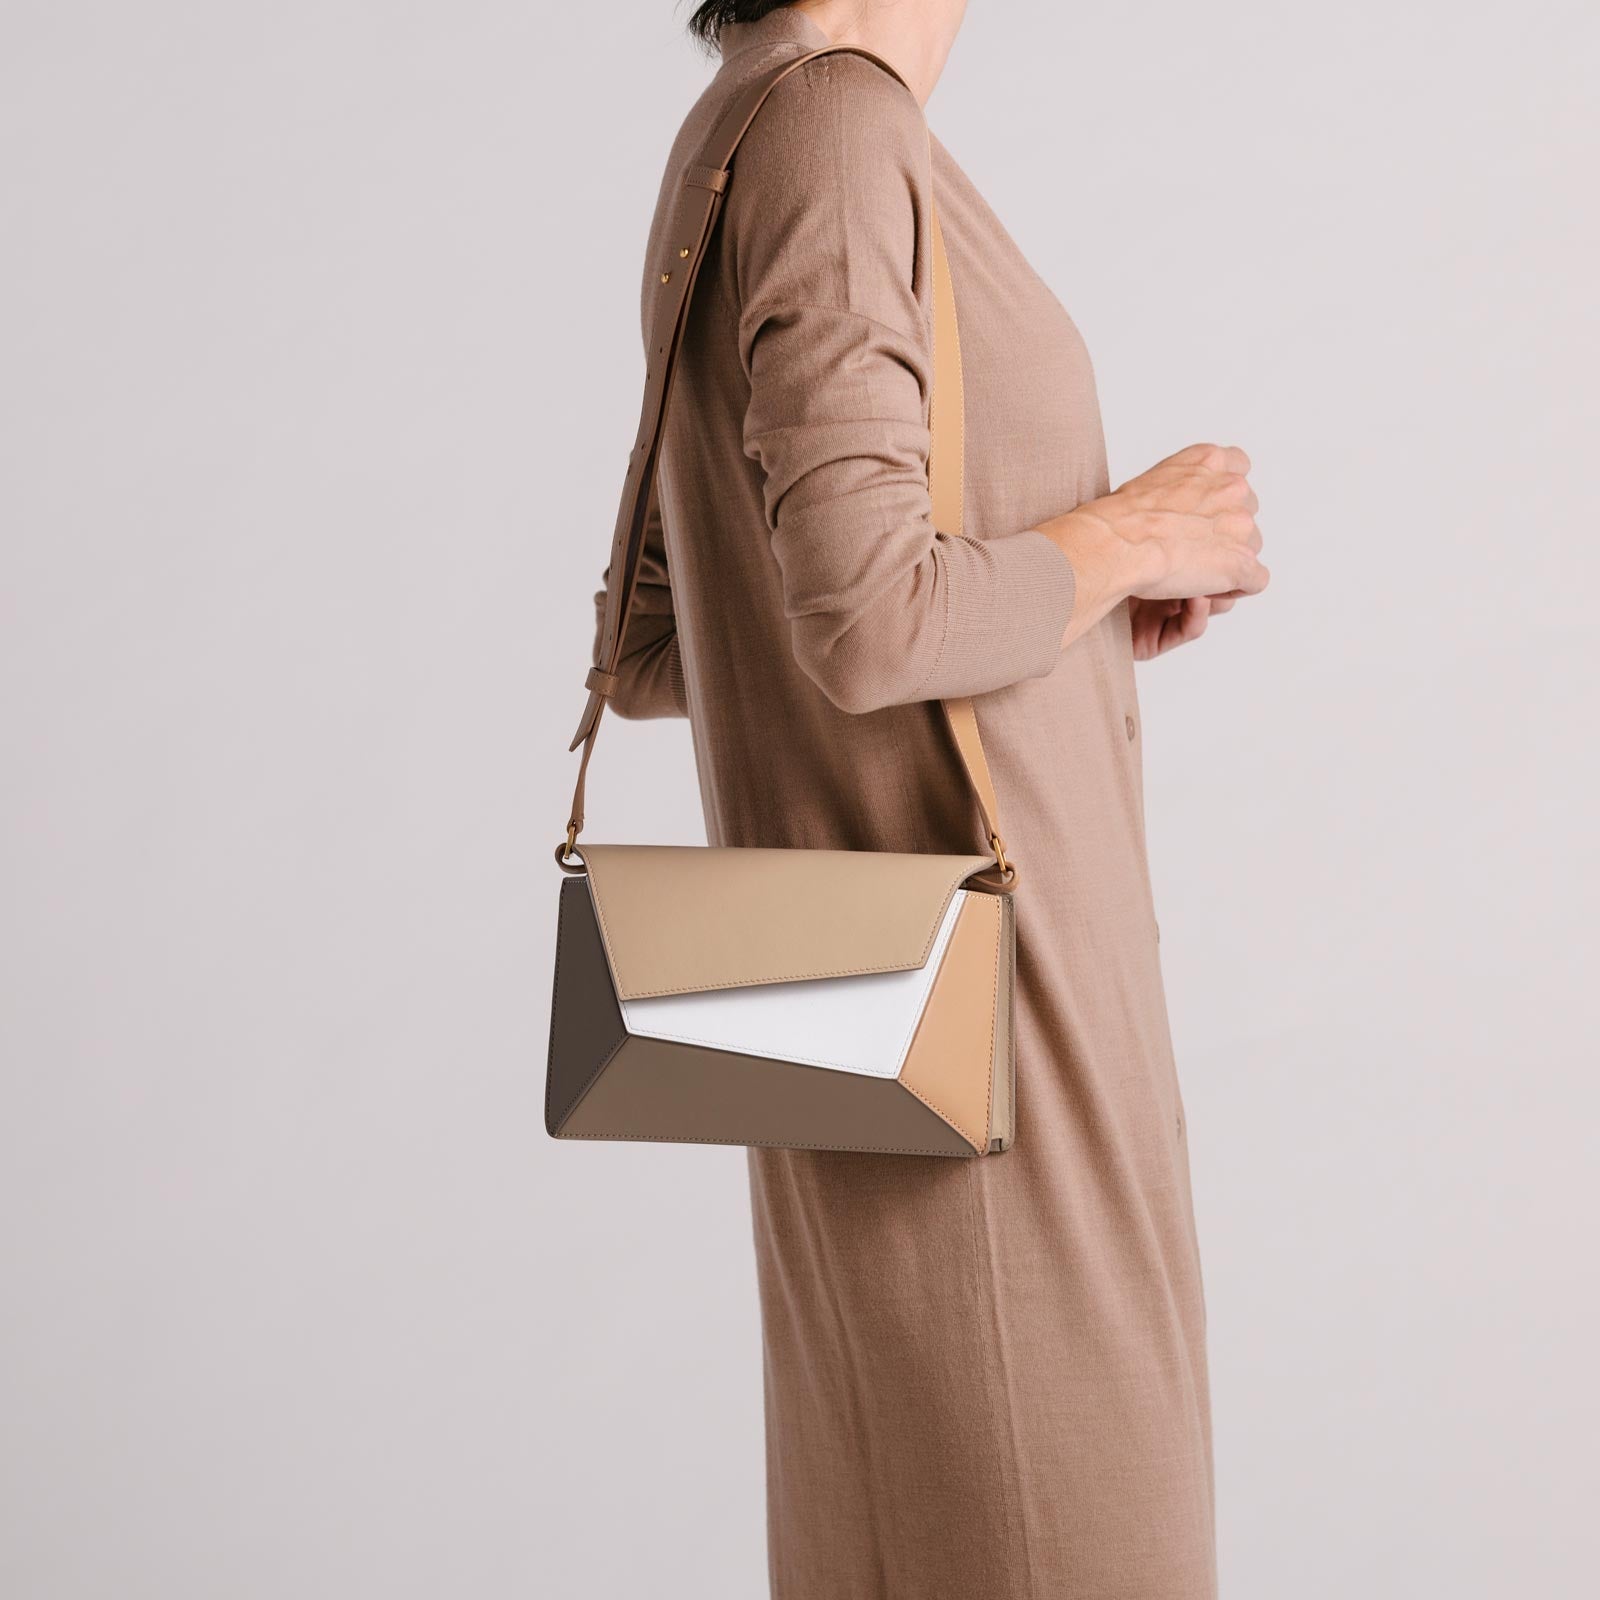 Naomi south america bag, Mlouye Luxury designer Bag